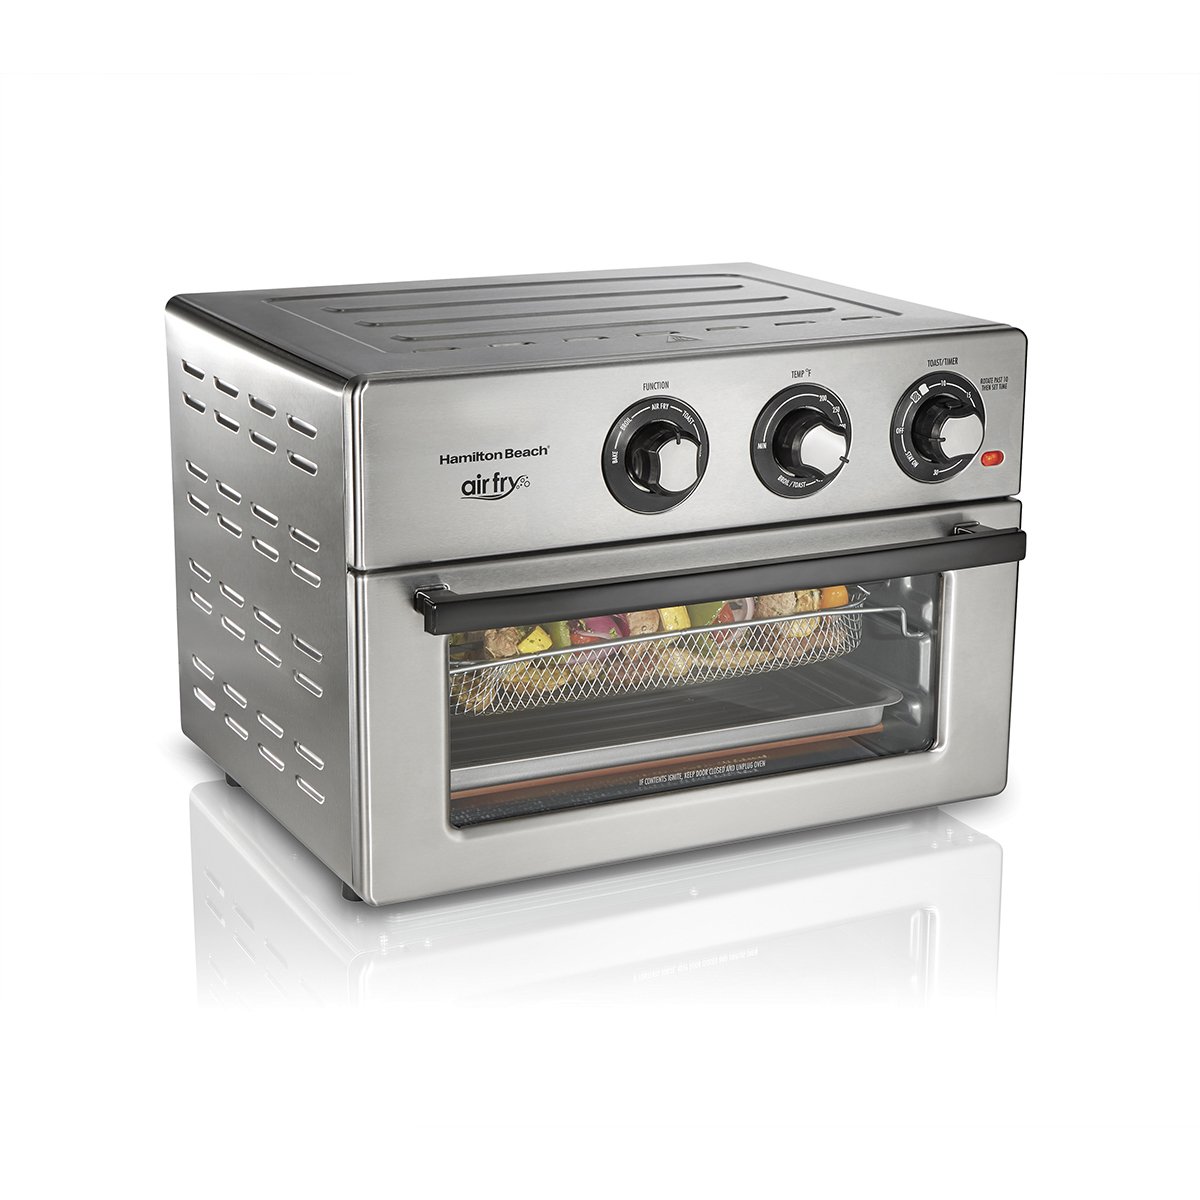 Air Fry Countertop Oven (31225)